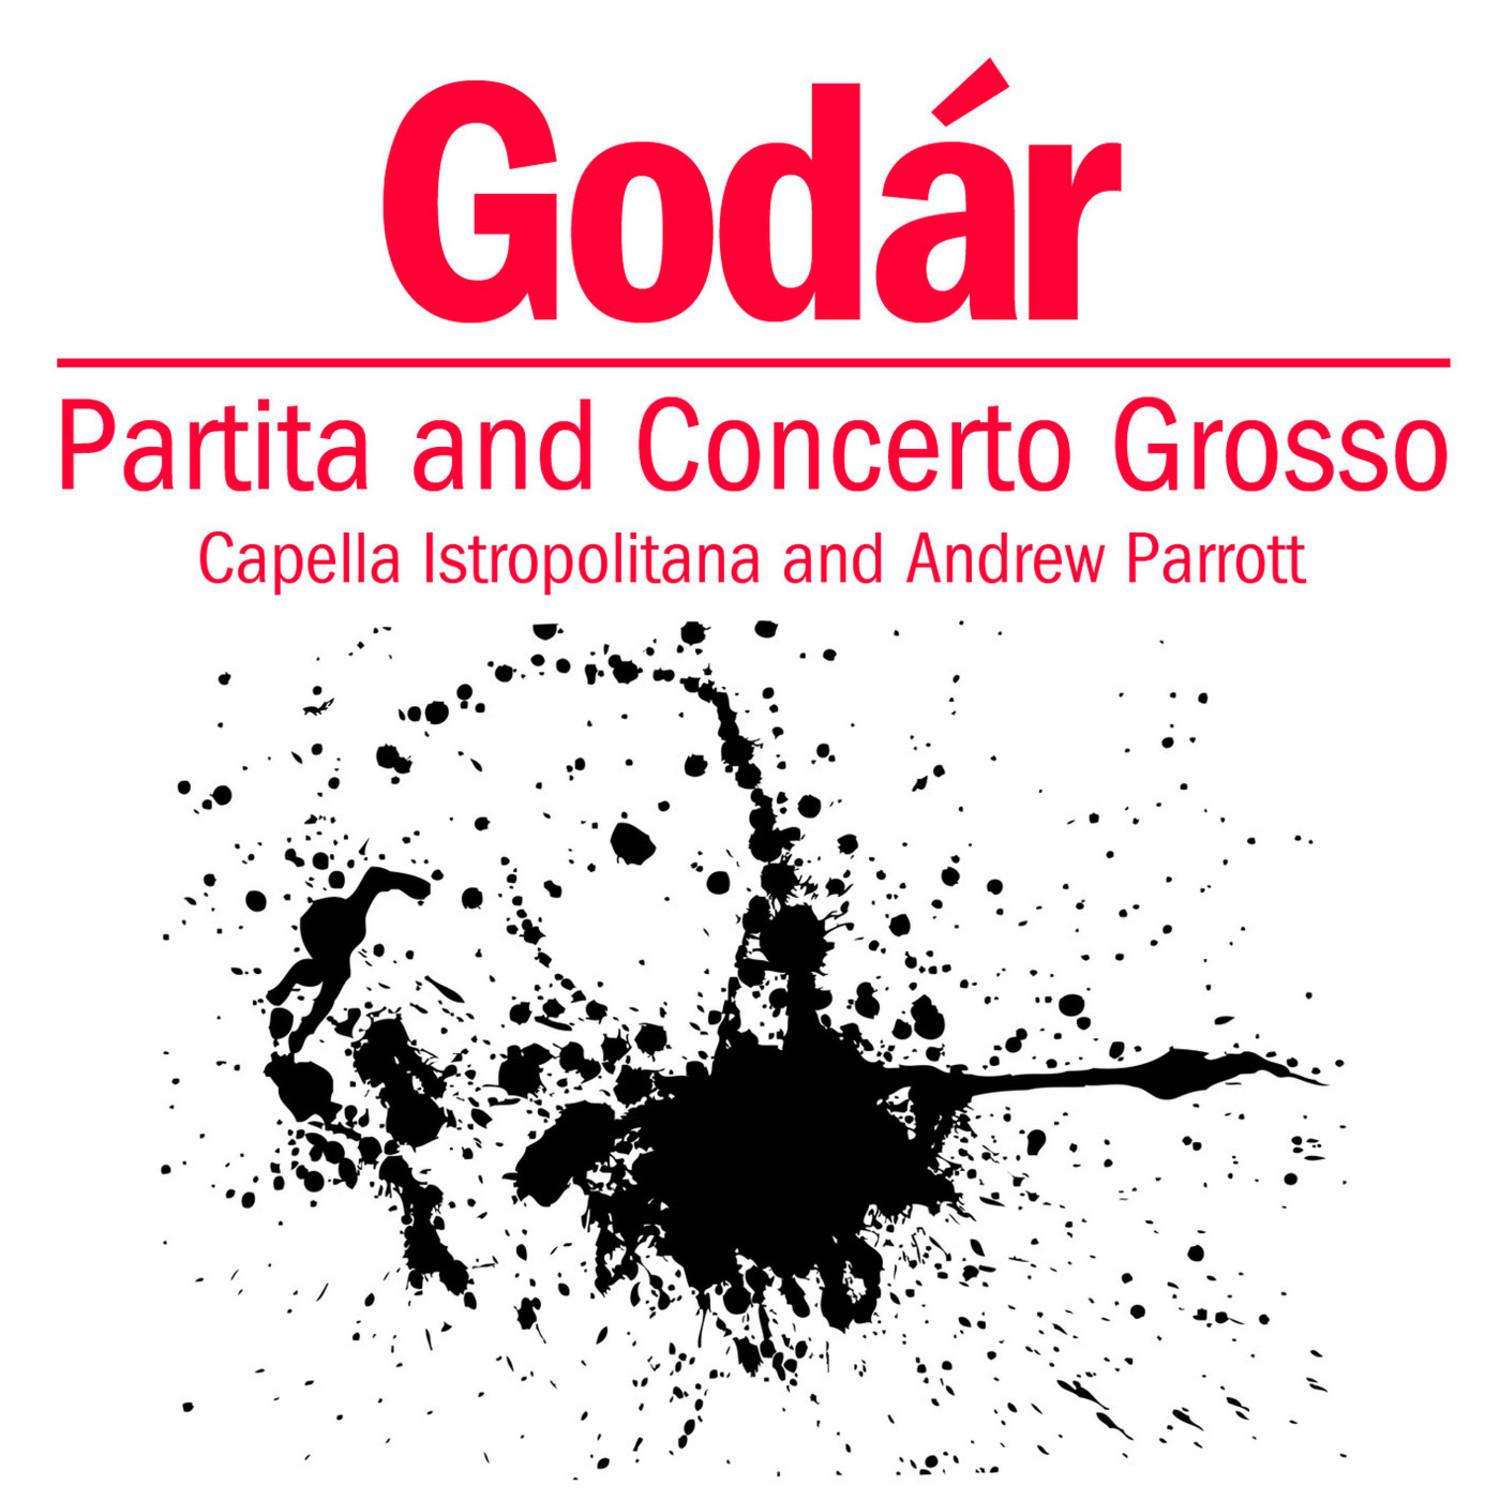 Goda r: Partita and Concerto Grosso